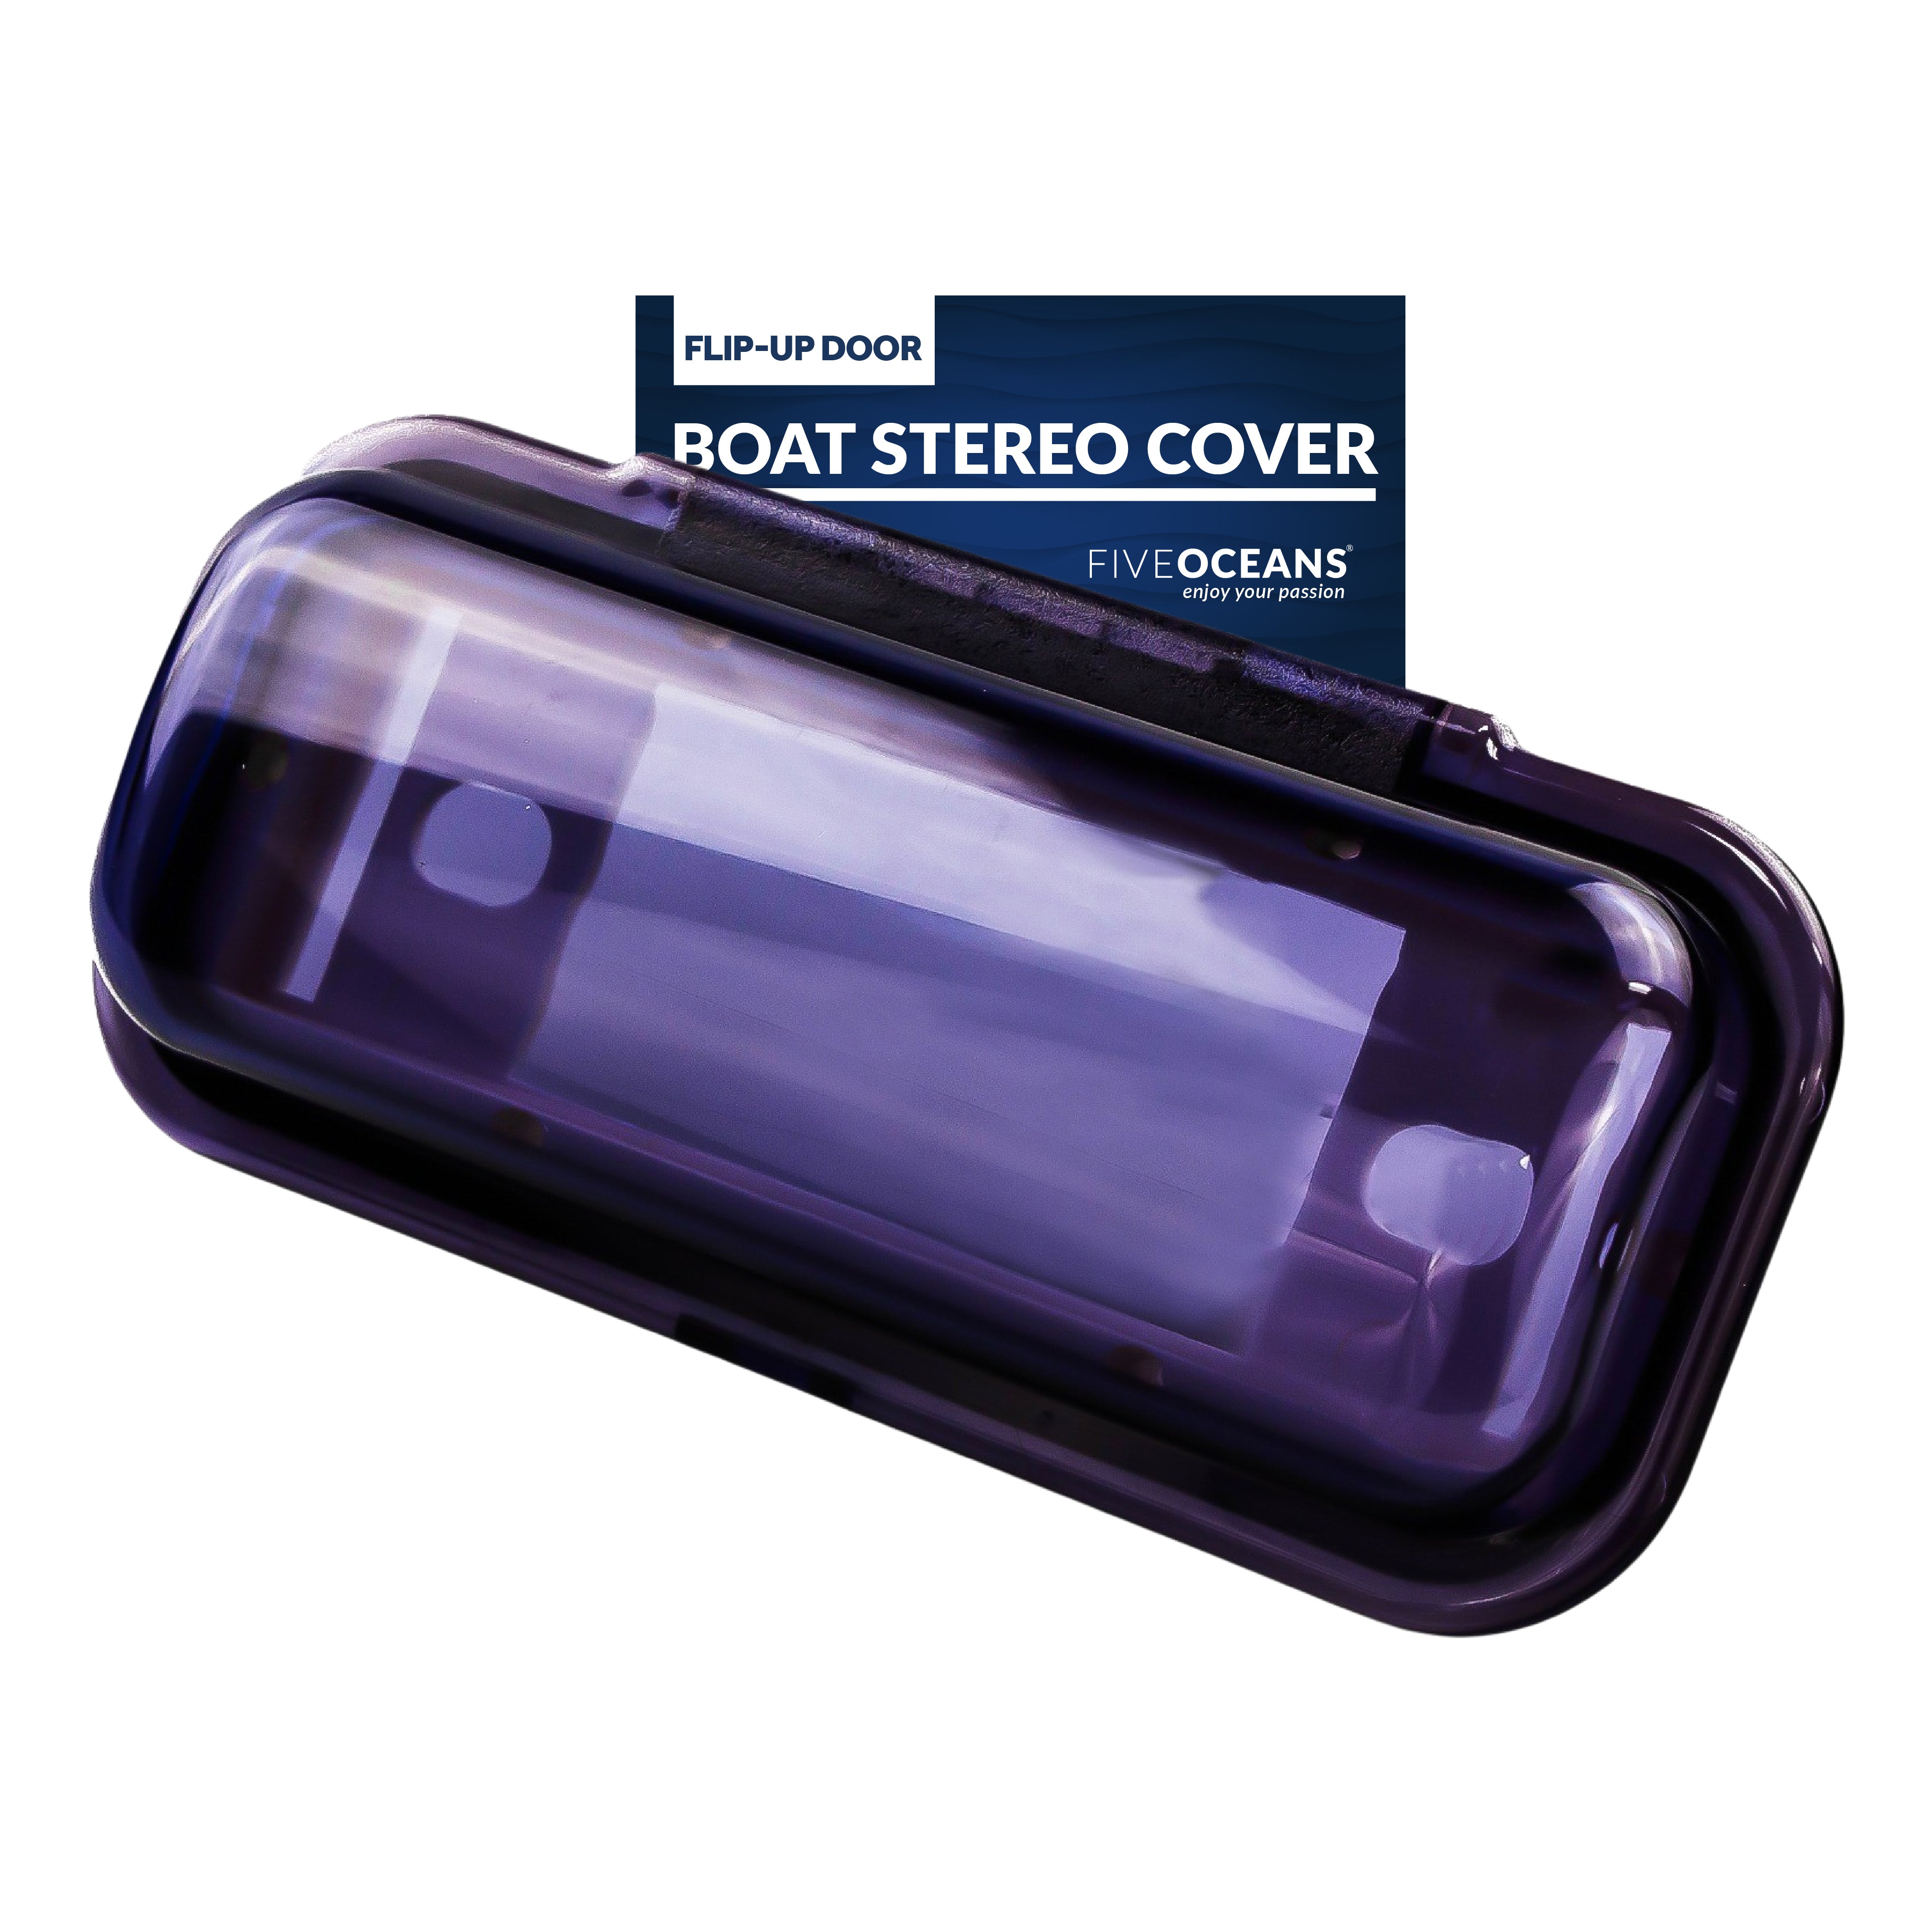 Boat Stereo Cover, Flip-up Door - FO-2234-1